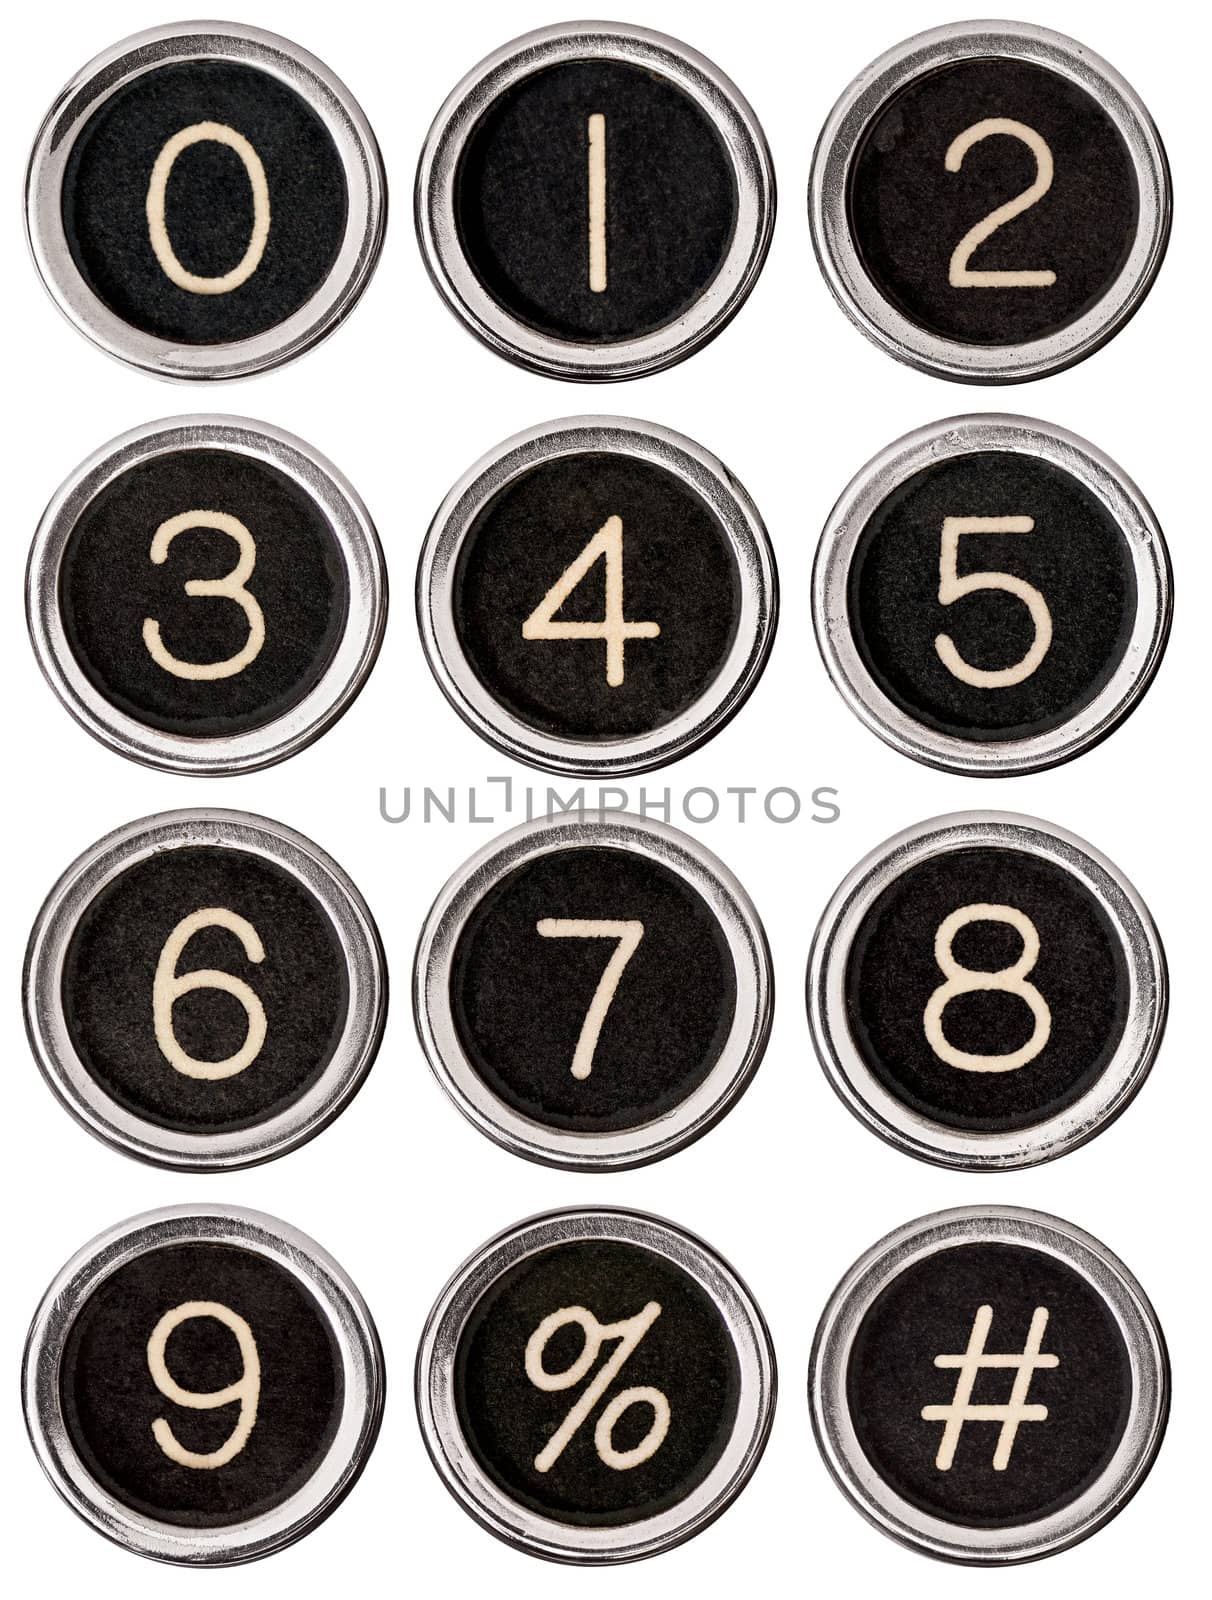 Vintage Typewriter Number Keys by Em3